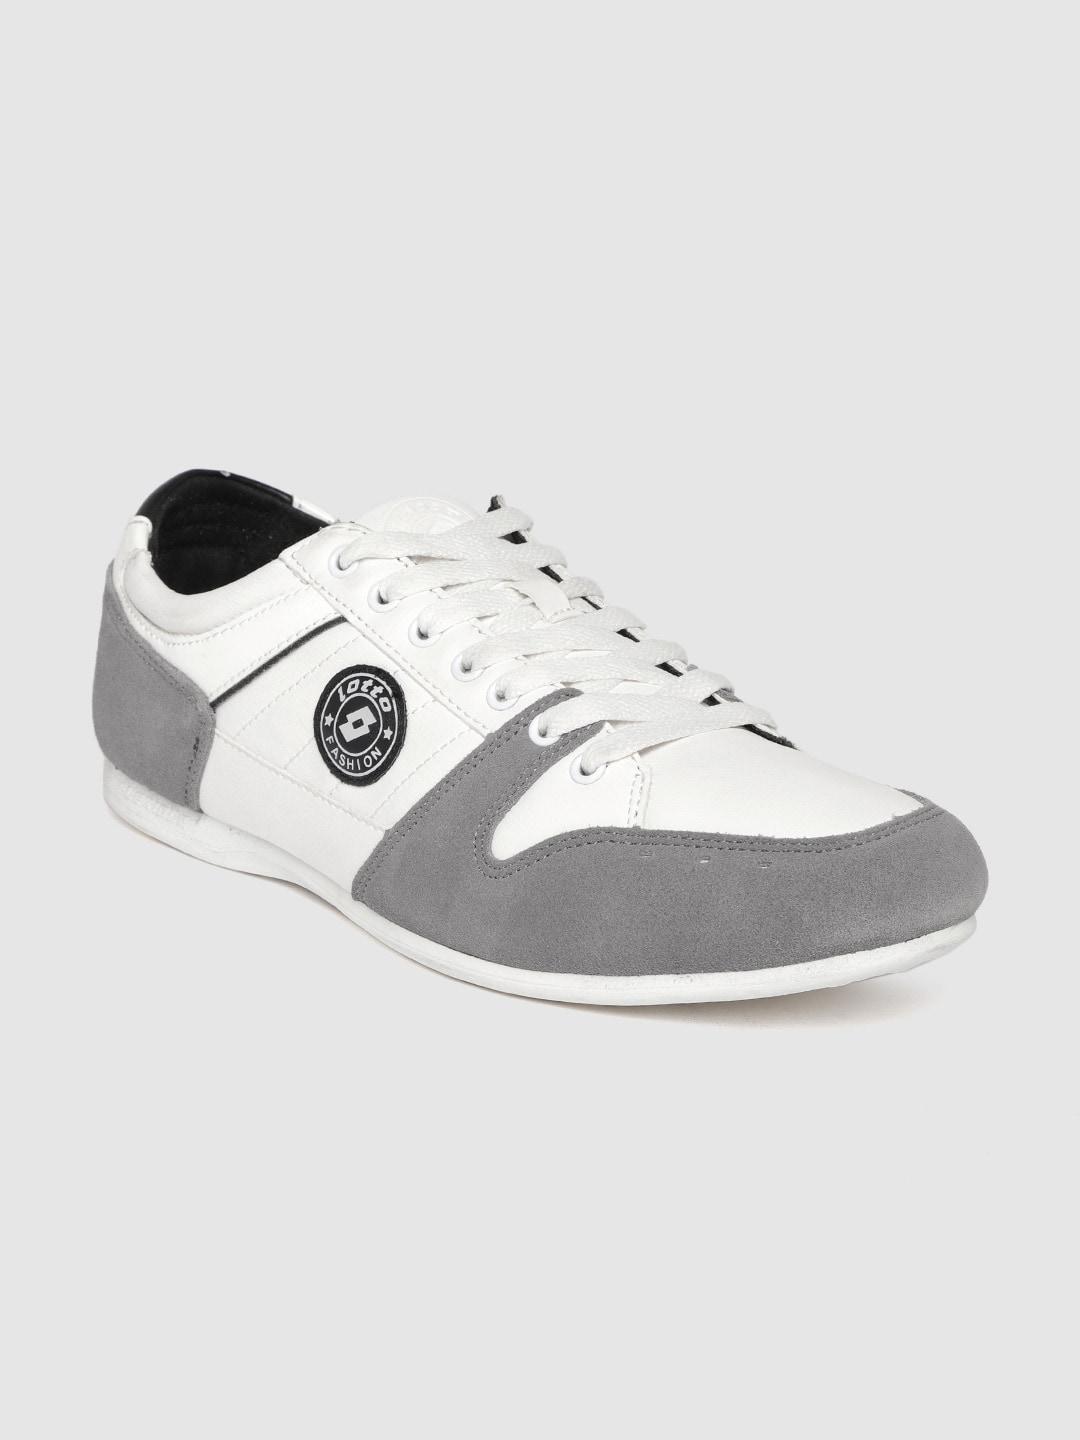 Lotto Men White & Grey Colourblocked Sneakers